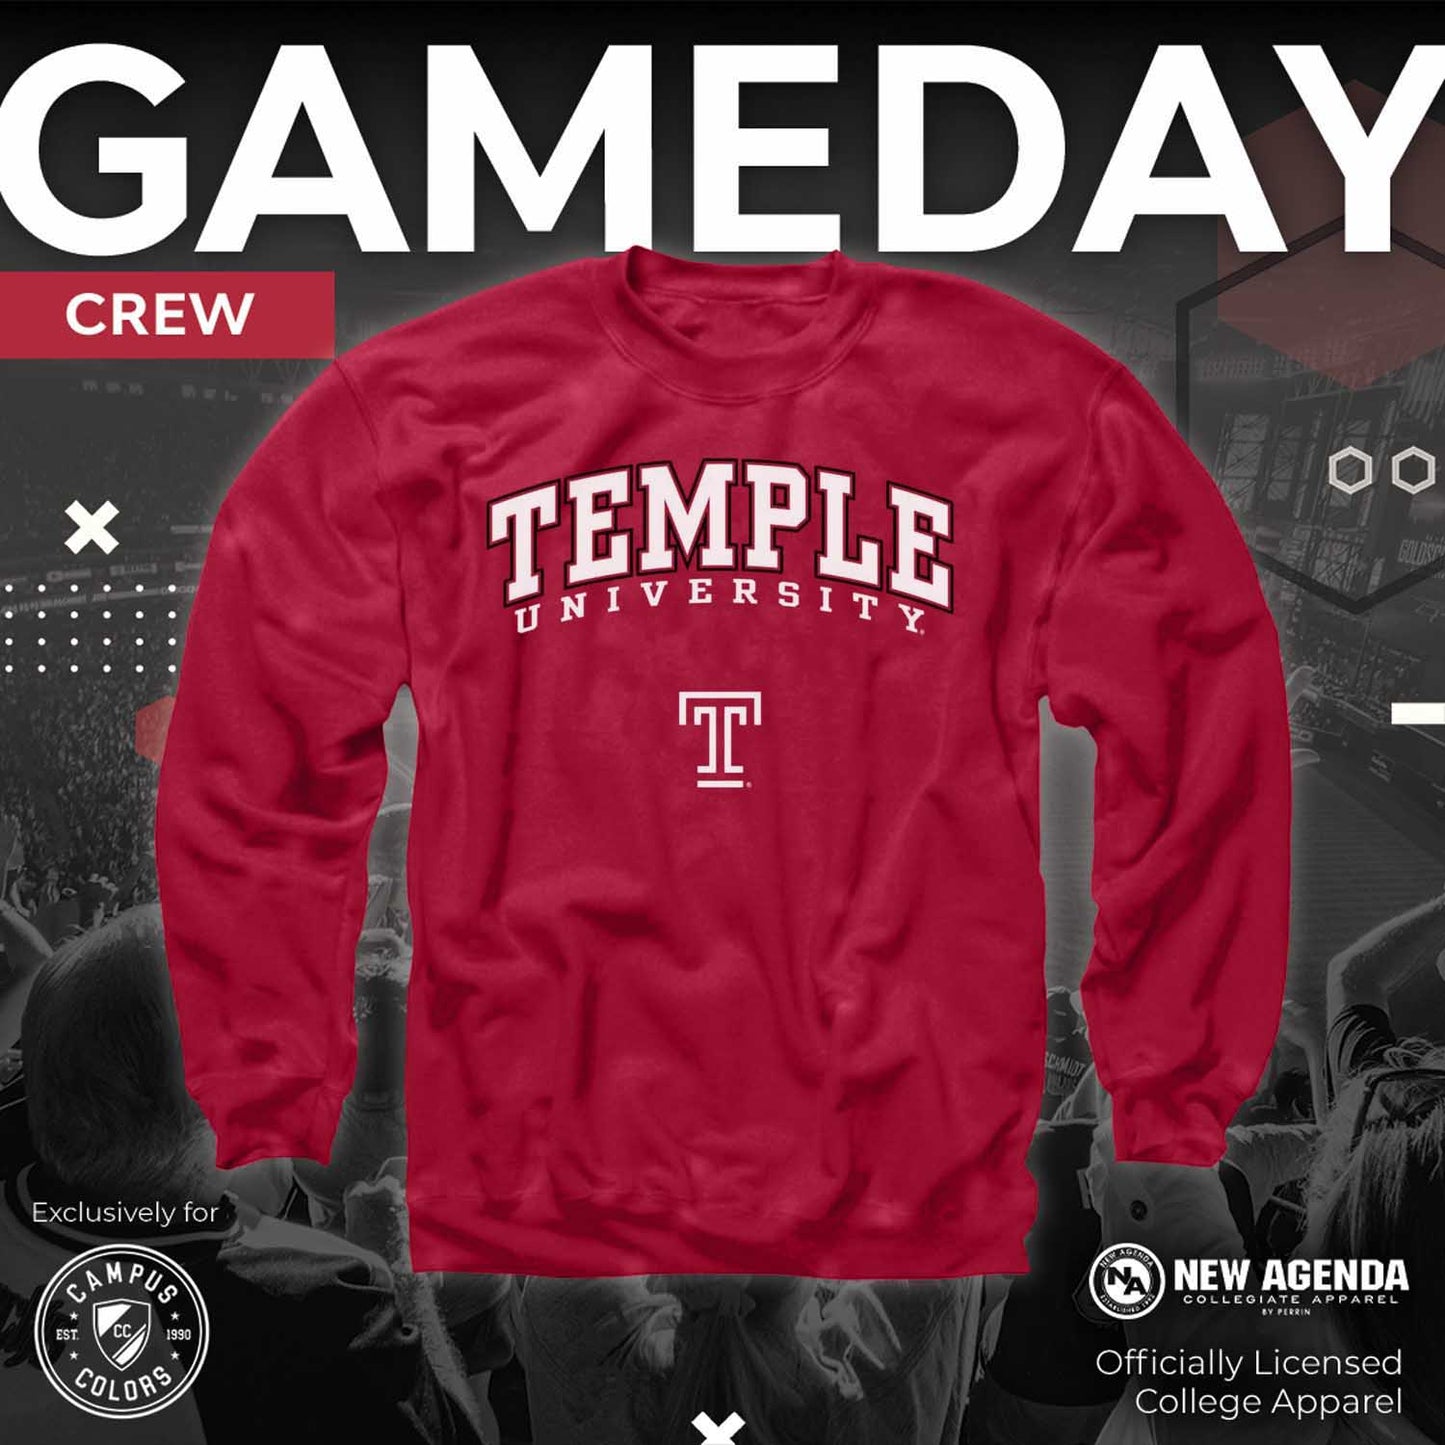 Temple Owls Adult Arch & Logo Soft Style Gameday Crewneck Sweatshirt - Maroon